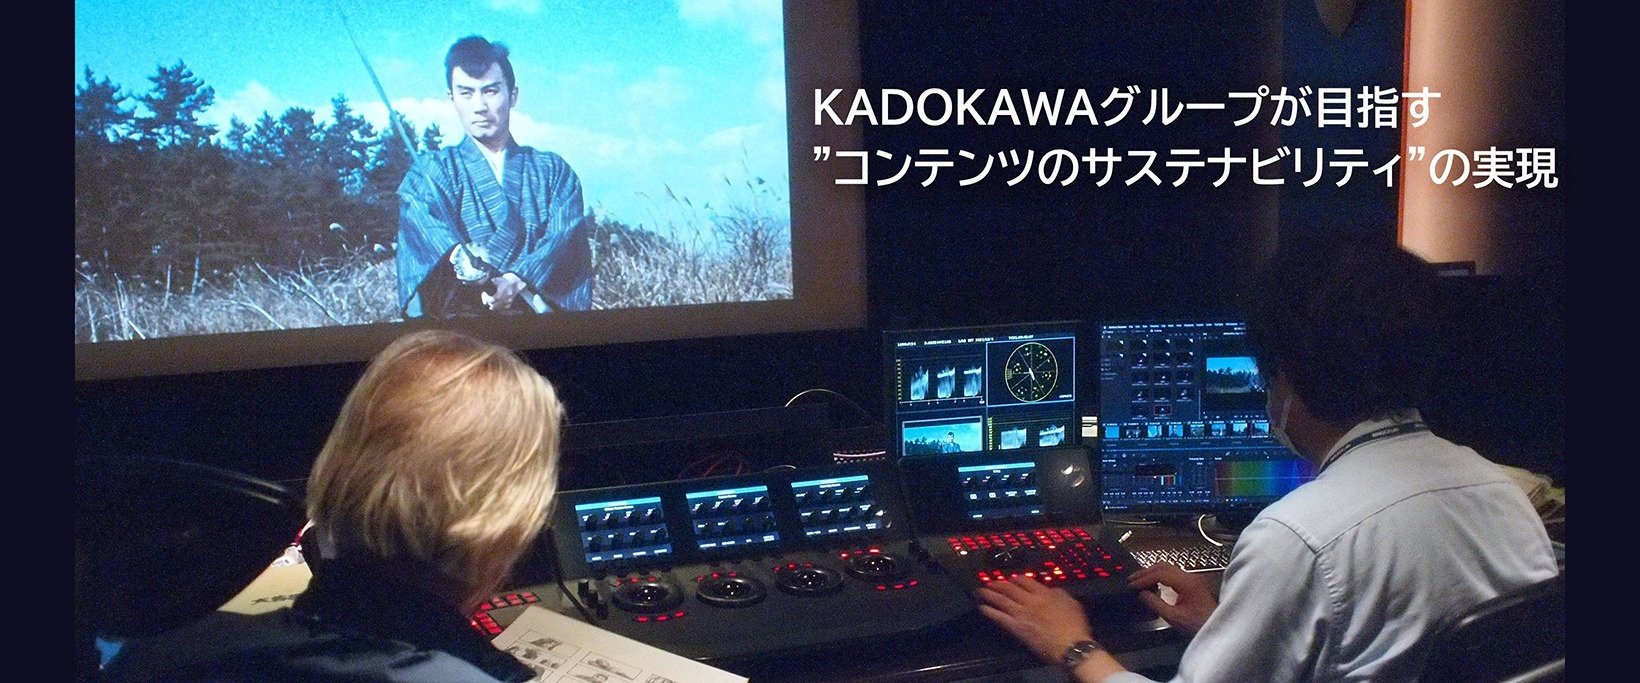 KADOKAWAグループが目指すコンテンツのサステナビリティの実現